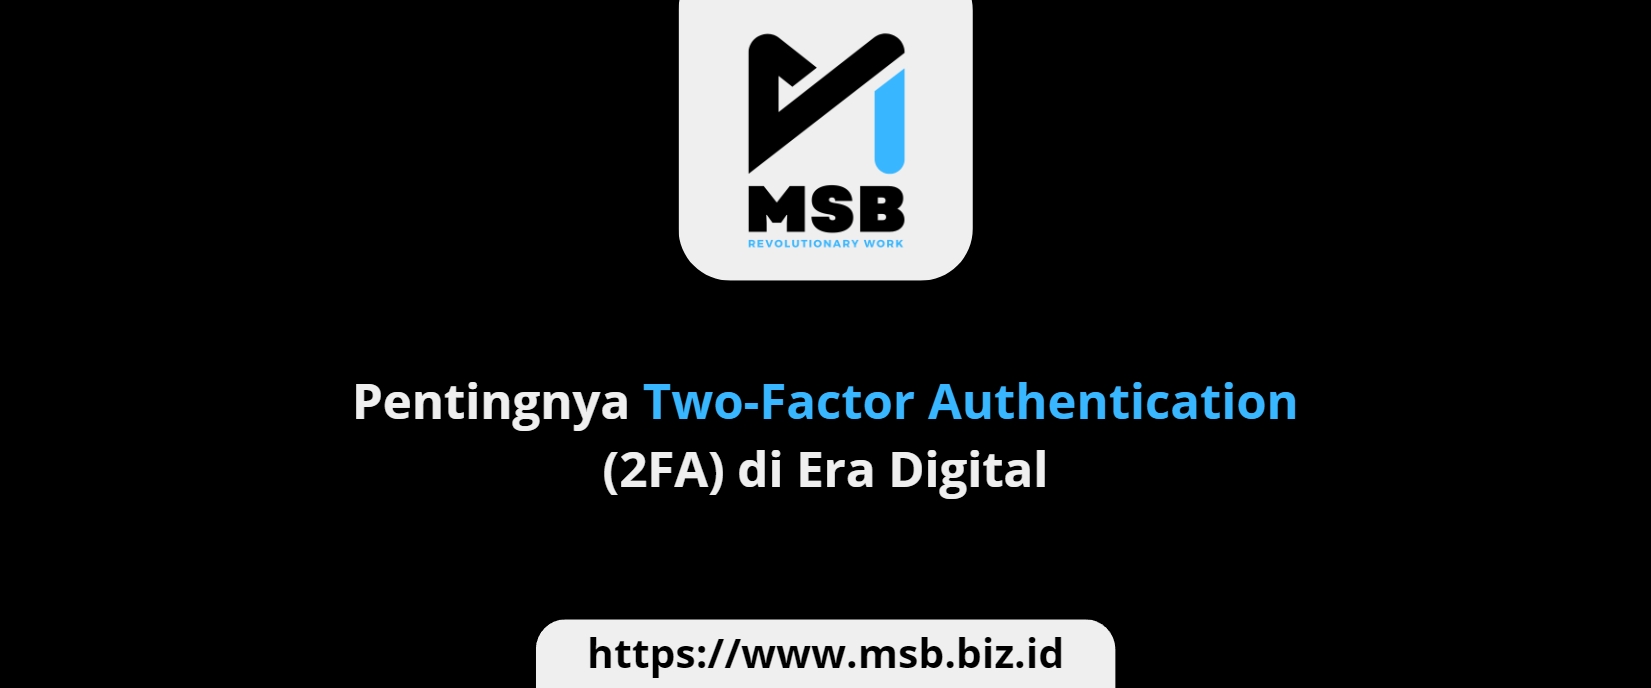 Pentingnya Two-Factor Authentication (2FA) di Era Digital